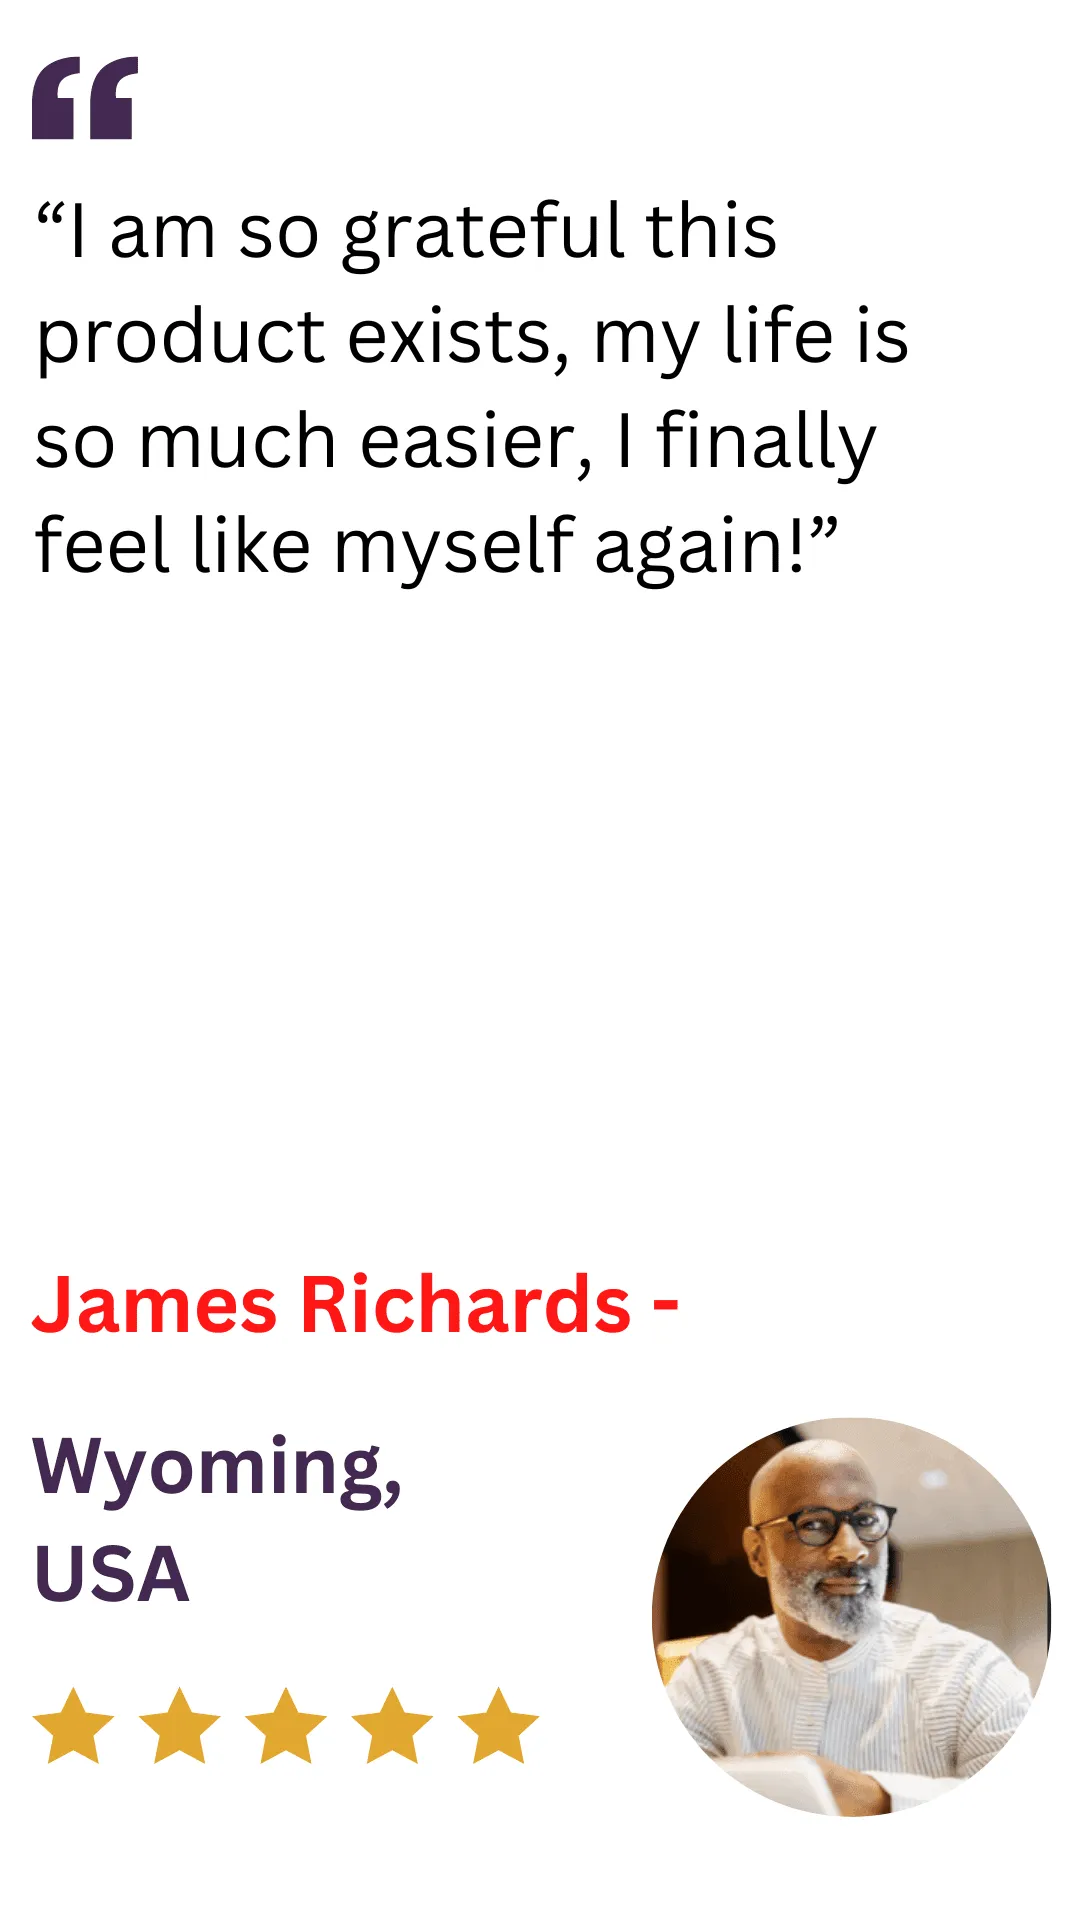 James Richards